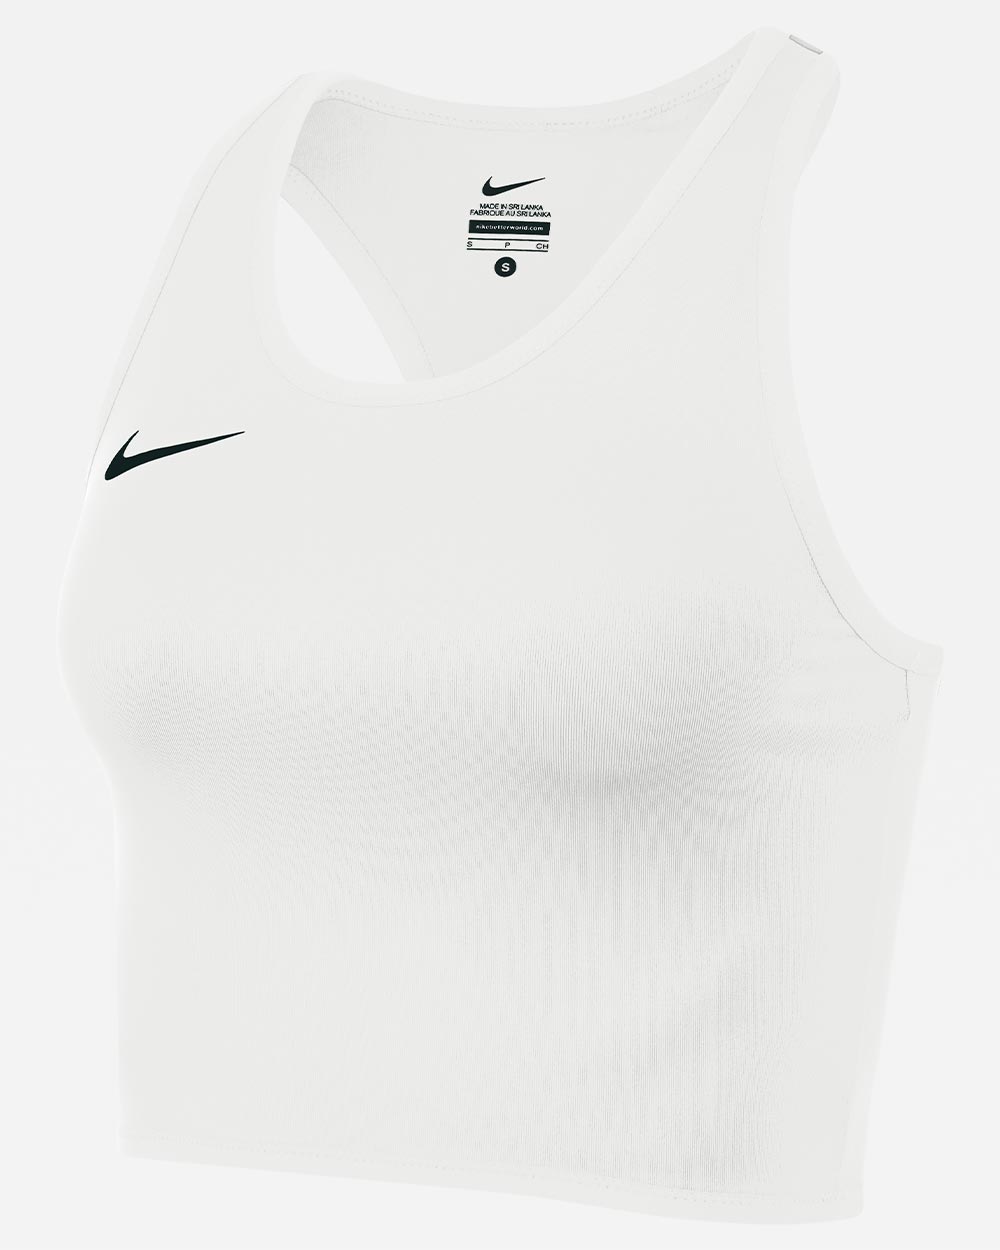 Débardeur de running Nike Stock Blanc Femme - NT0312-100 Blanc XS female